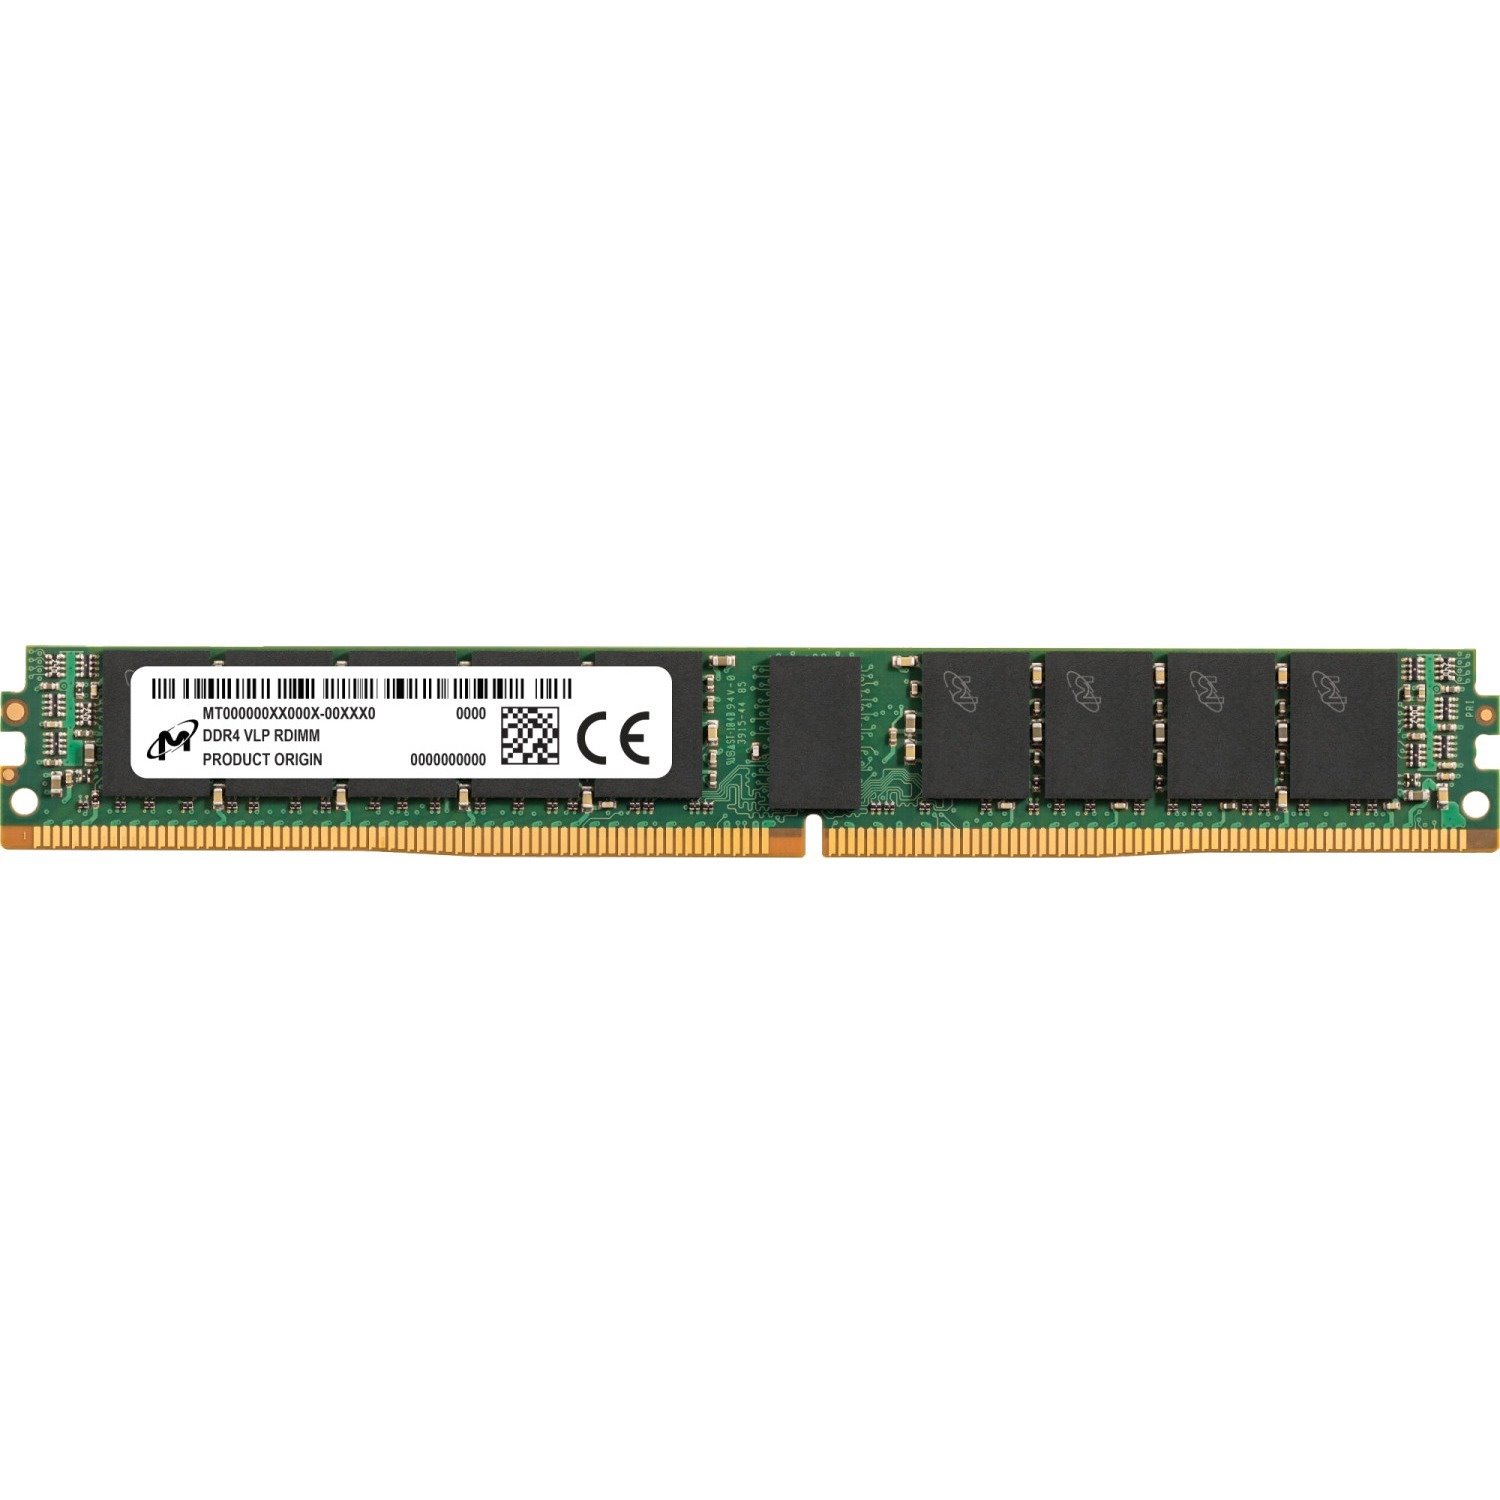 Crucial RAM Module for Server, Workstation - 16 GB (1 x 16GB) - DDR4-3200/PC4-25600 DDR4 SDRAM - 3200 MHz Dual-rank Memory - CL22 - 1.20 V